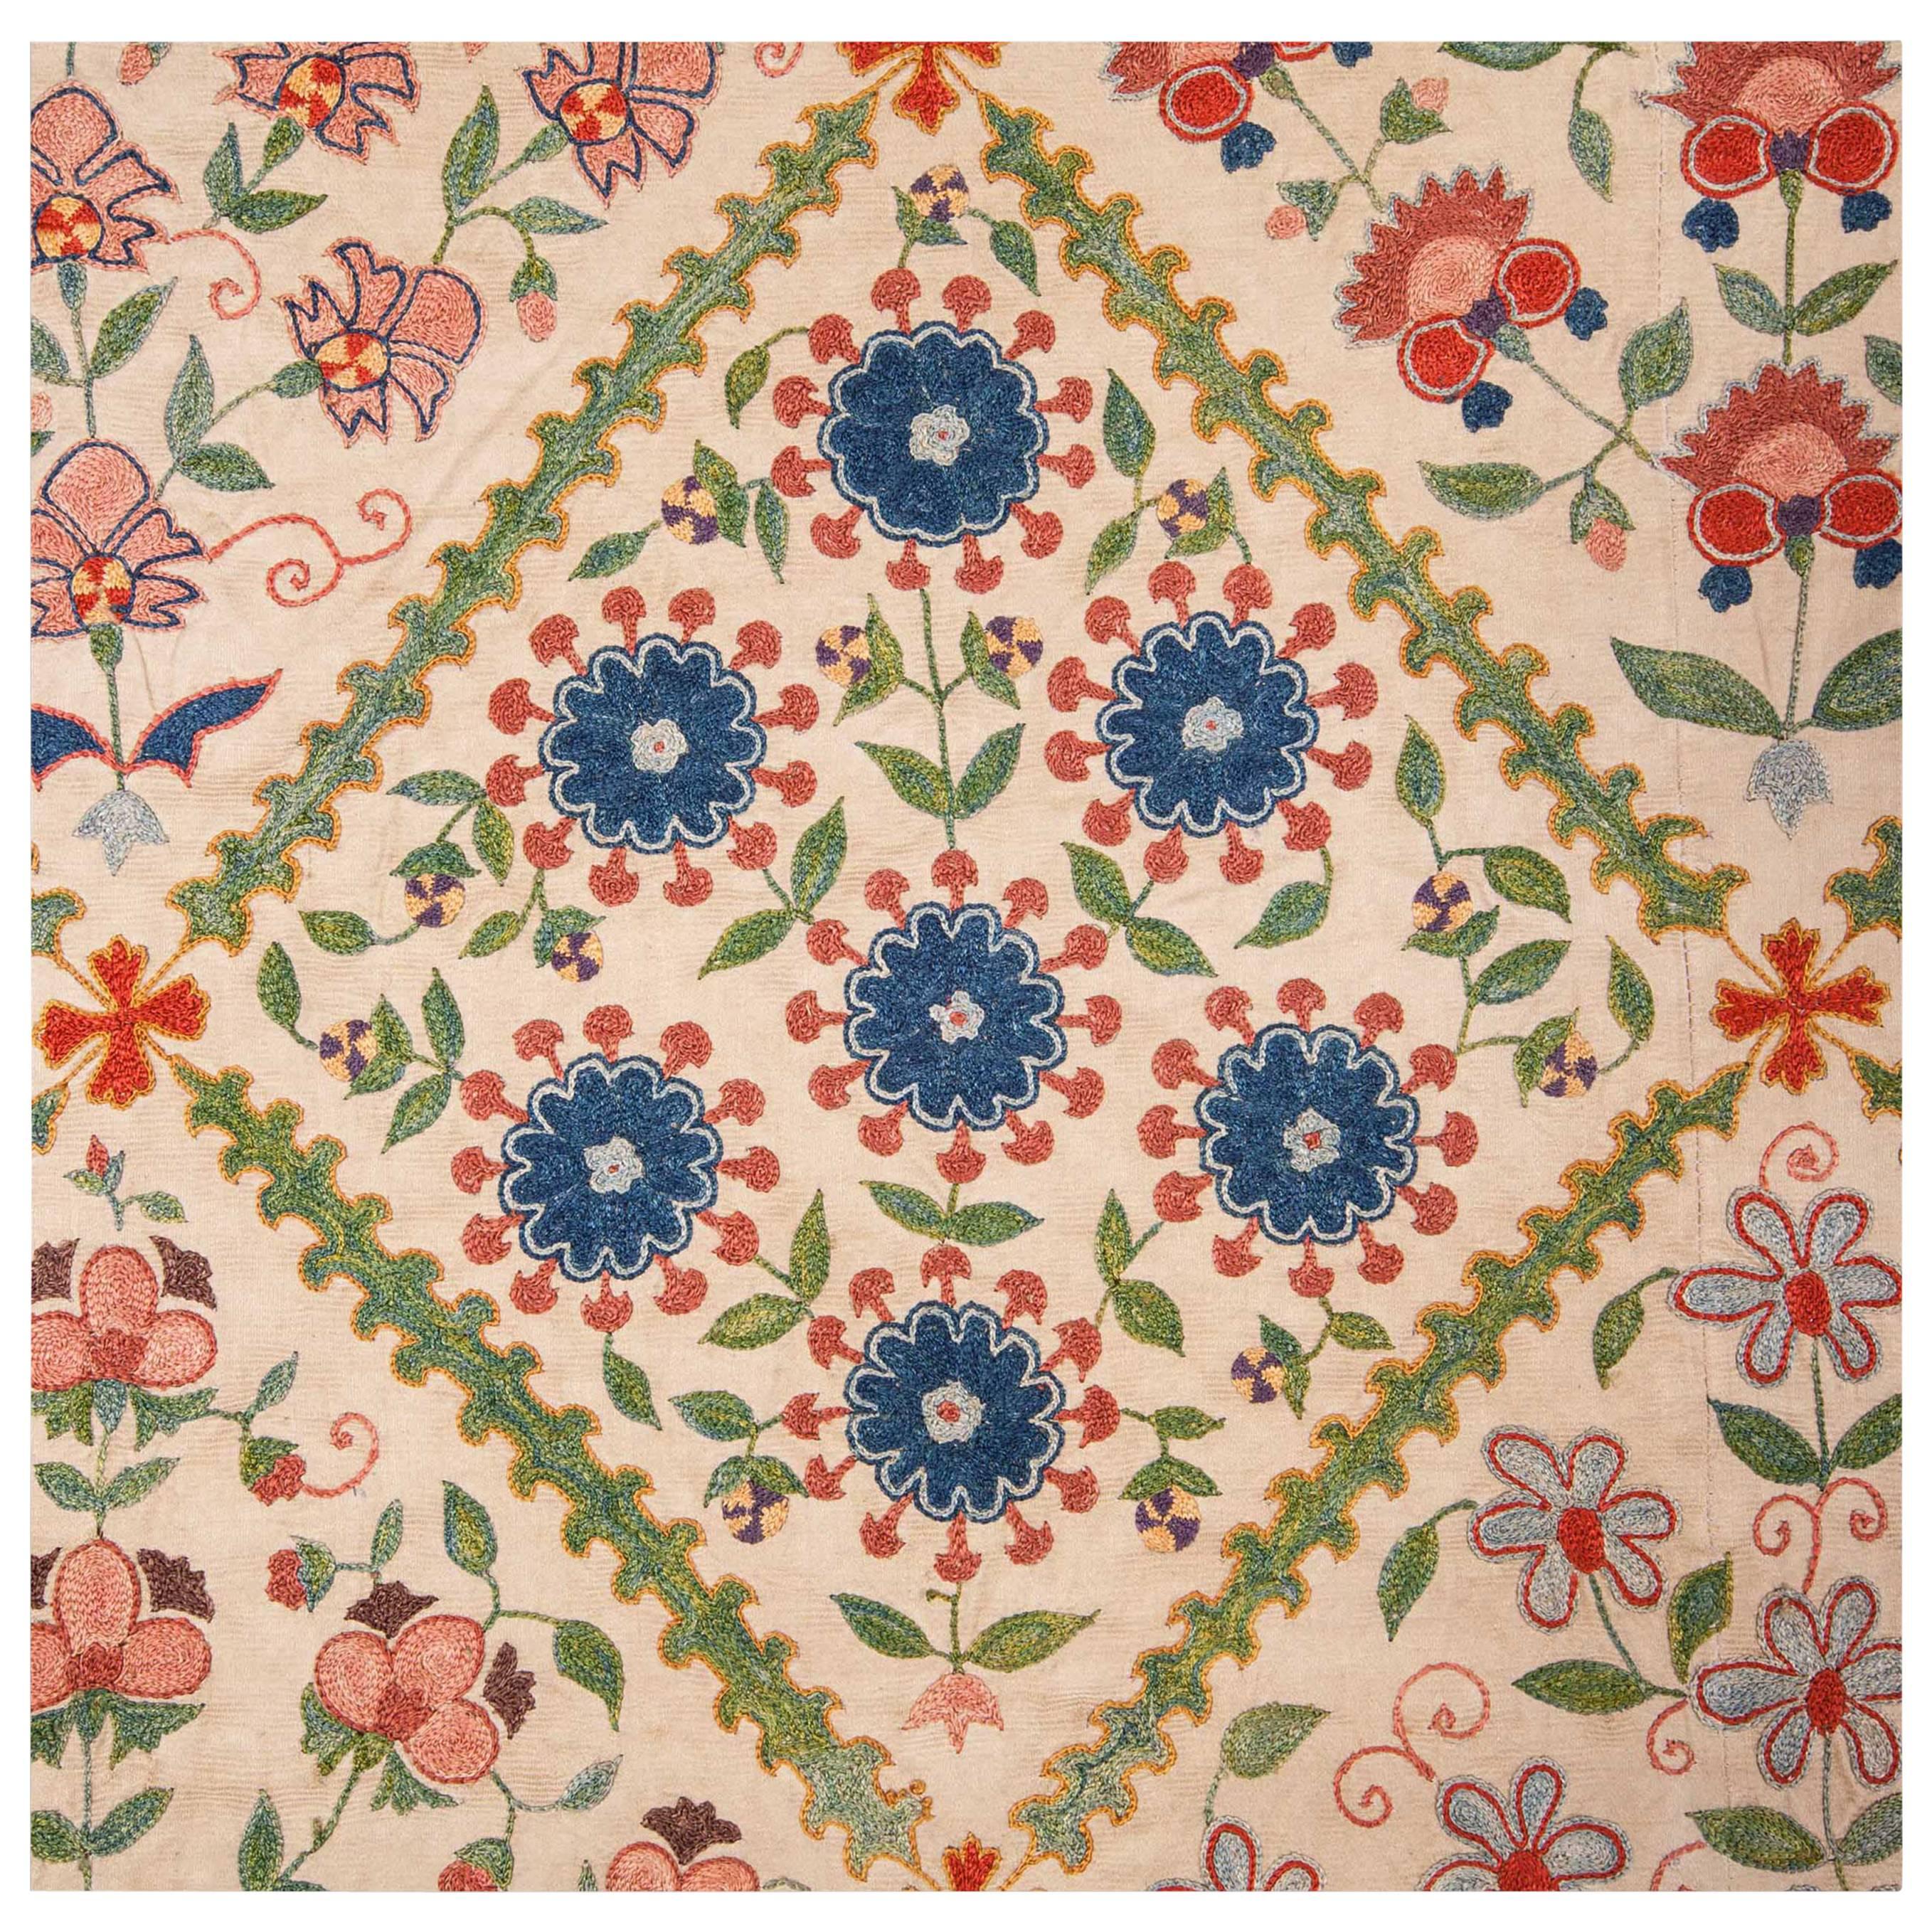 Contemporary Uzbek Silk Embroidery, Central Asia For Sale